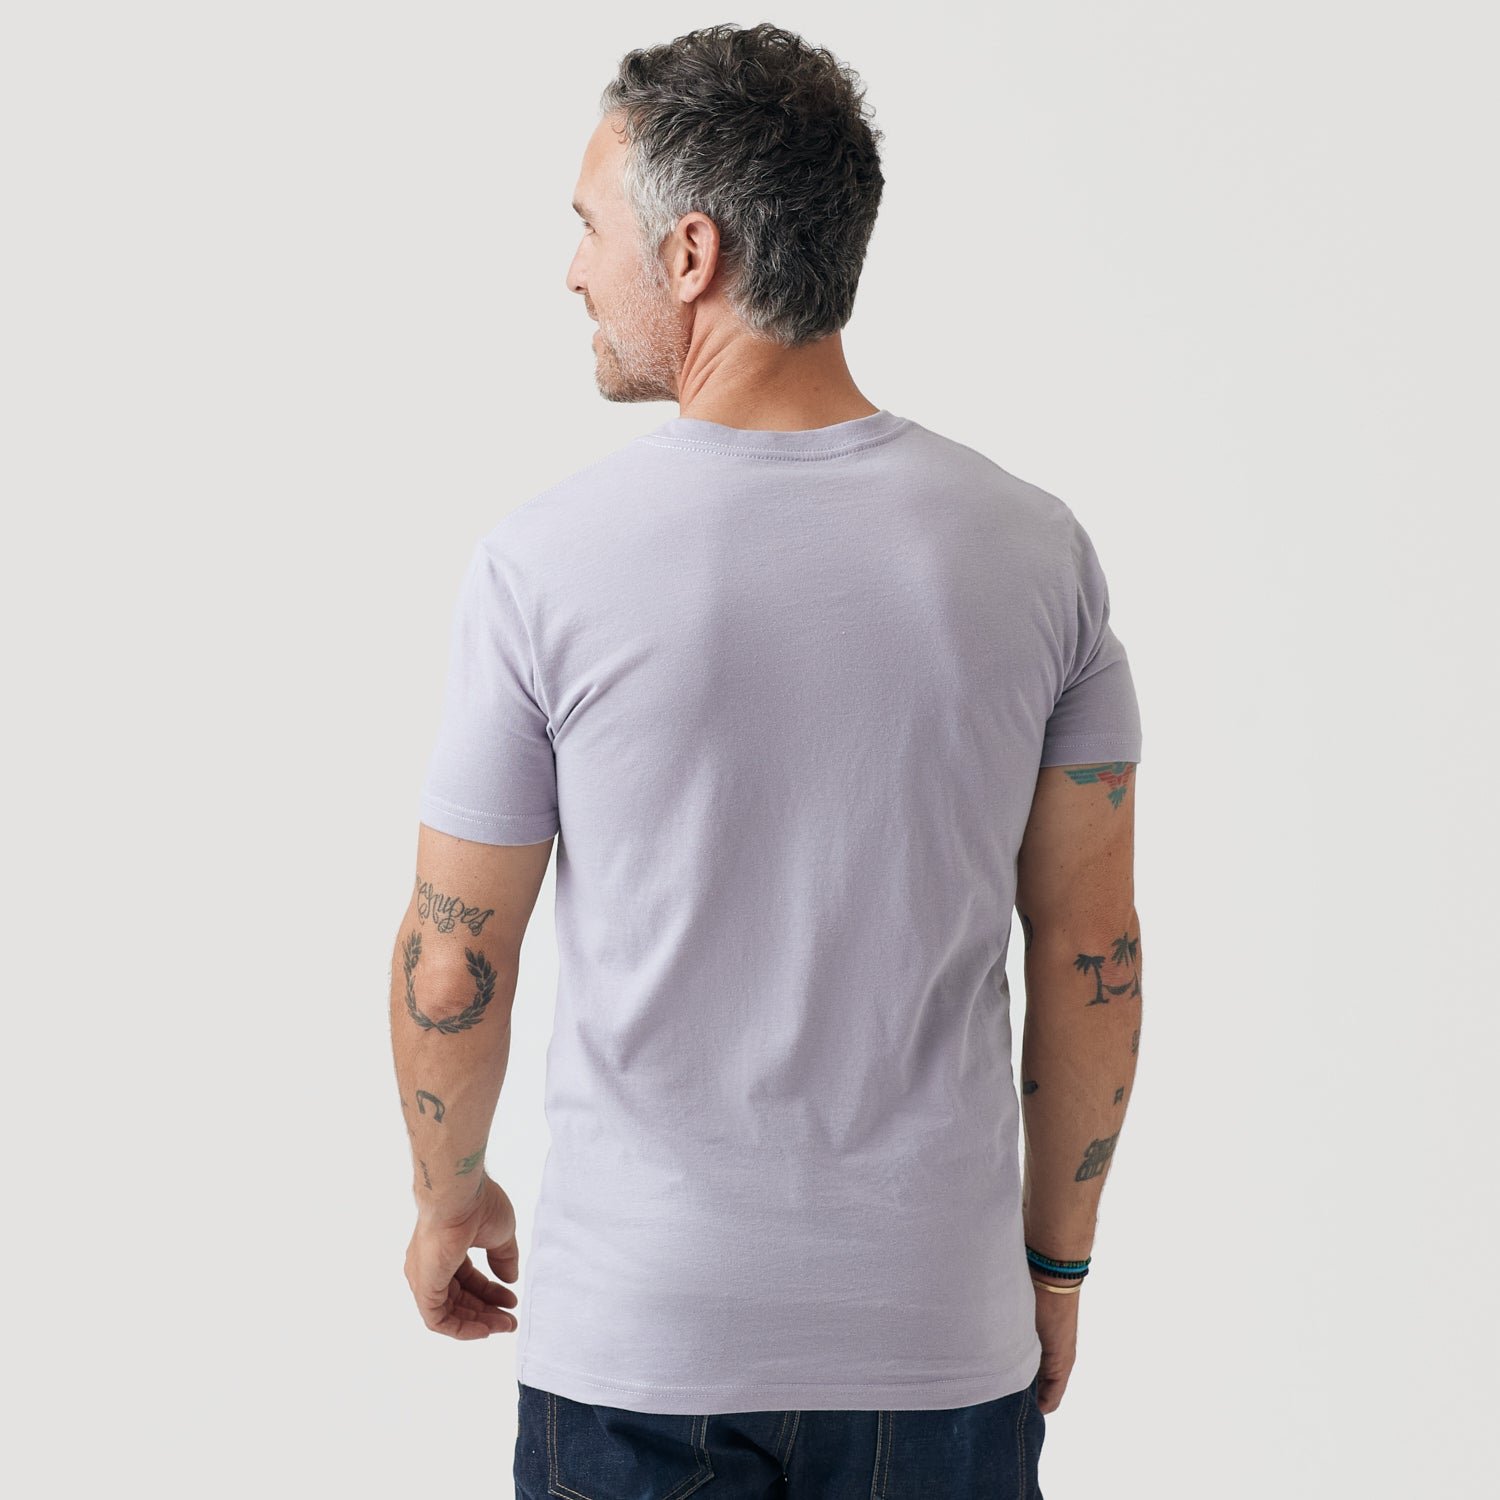 Lilac Gray V-Neck T-Shirt